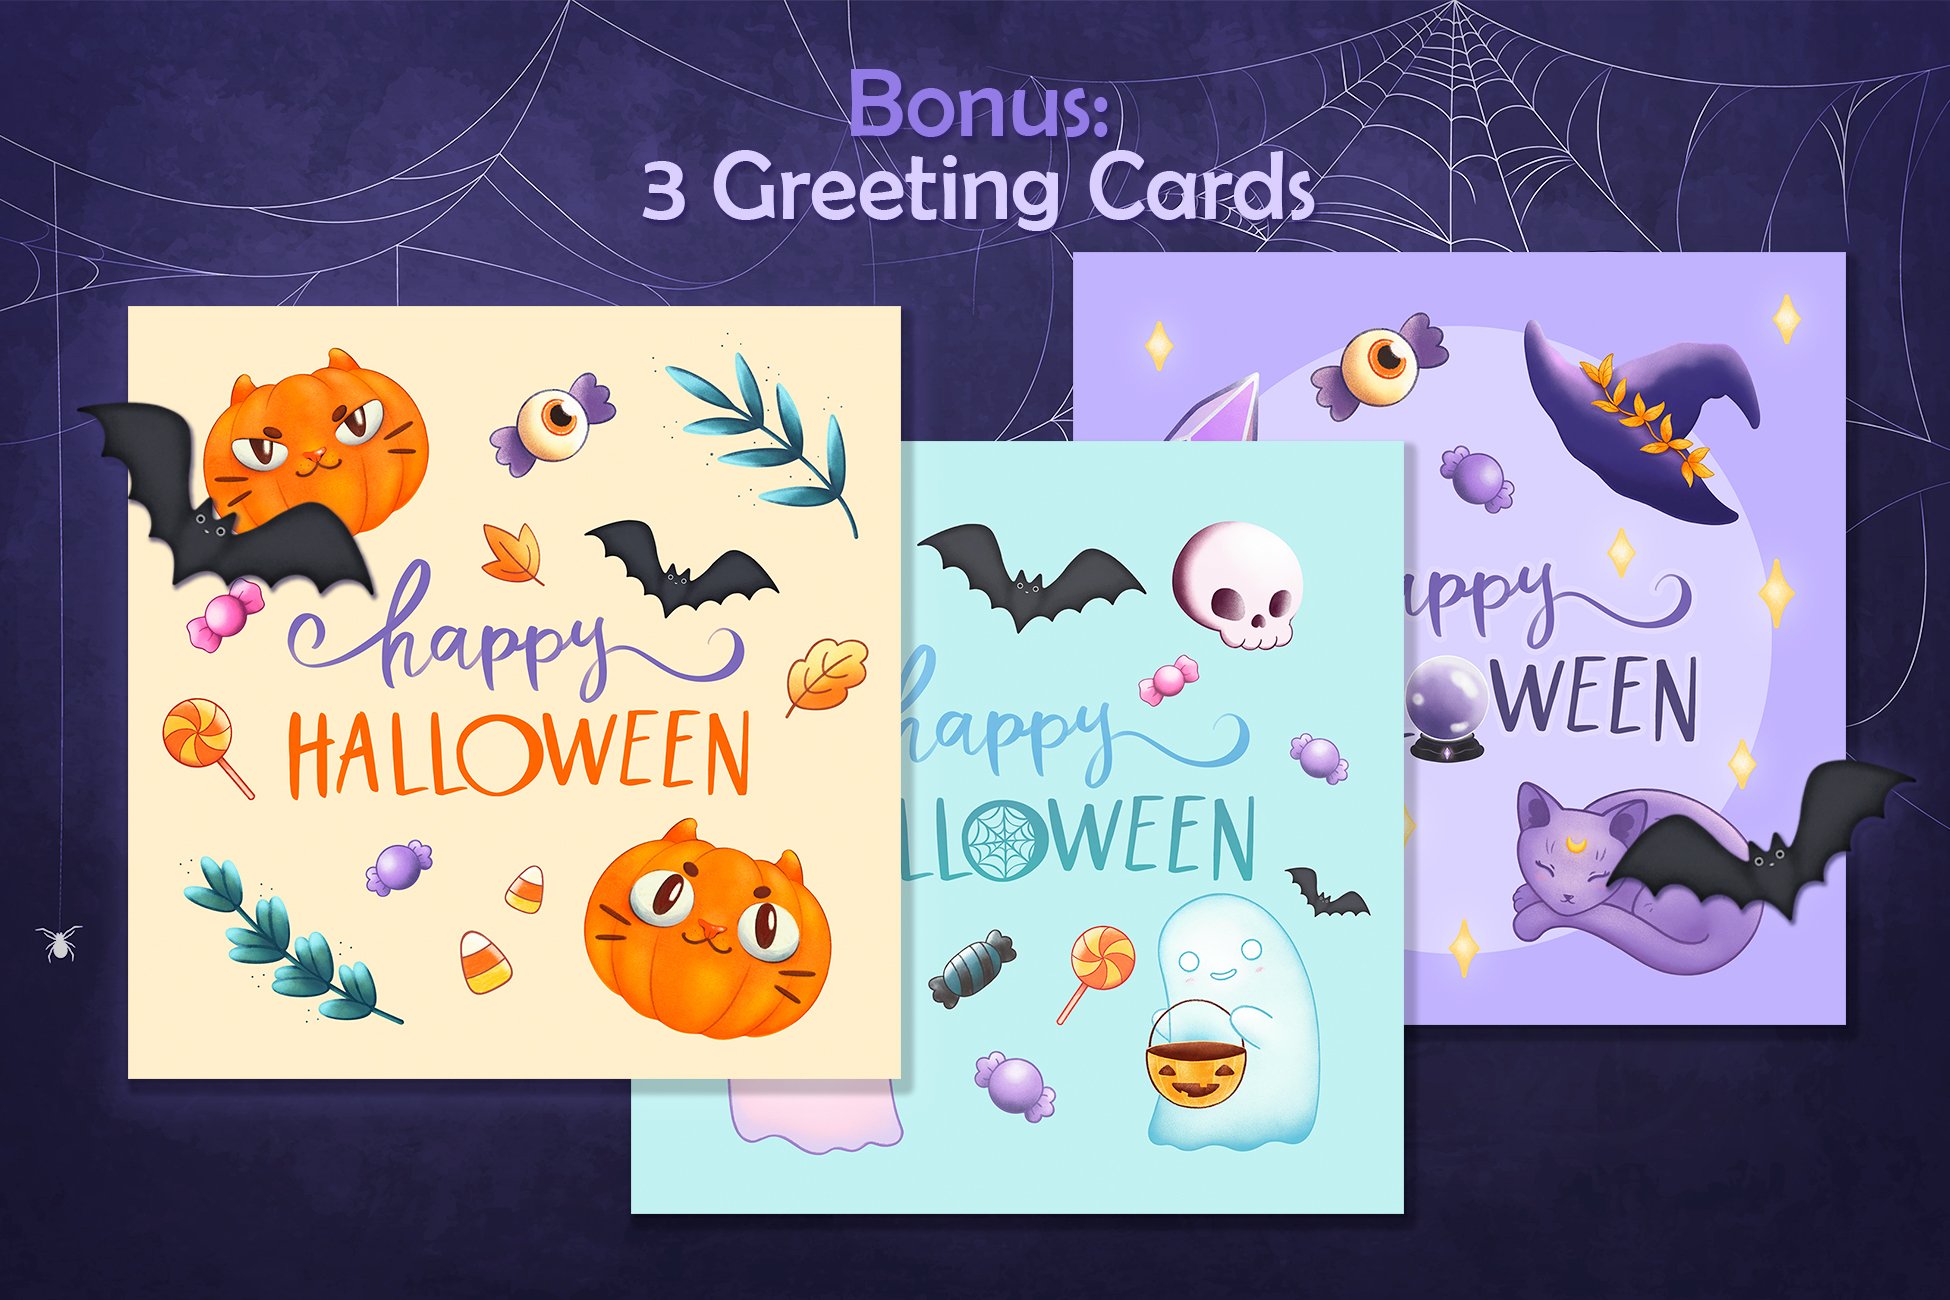 halloween 28329 — bonus cards 66